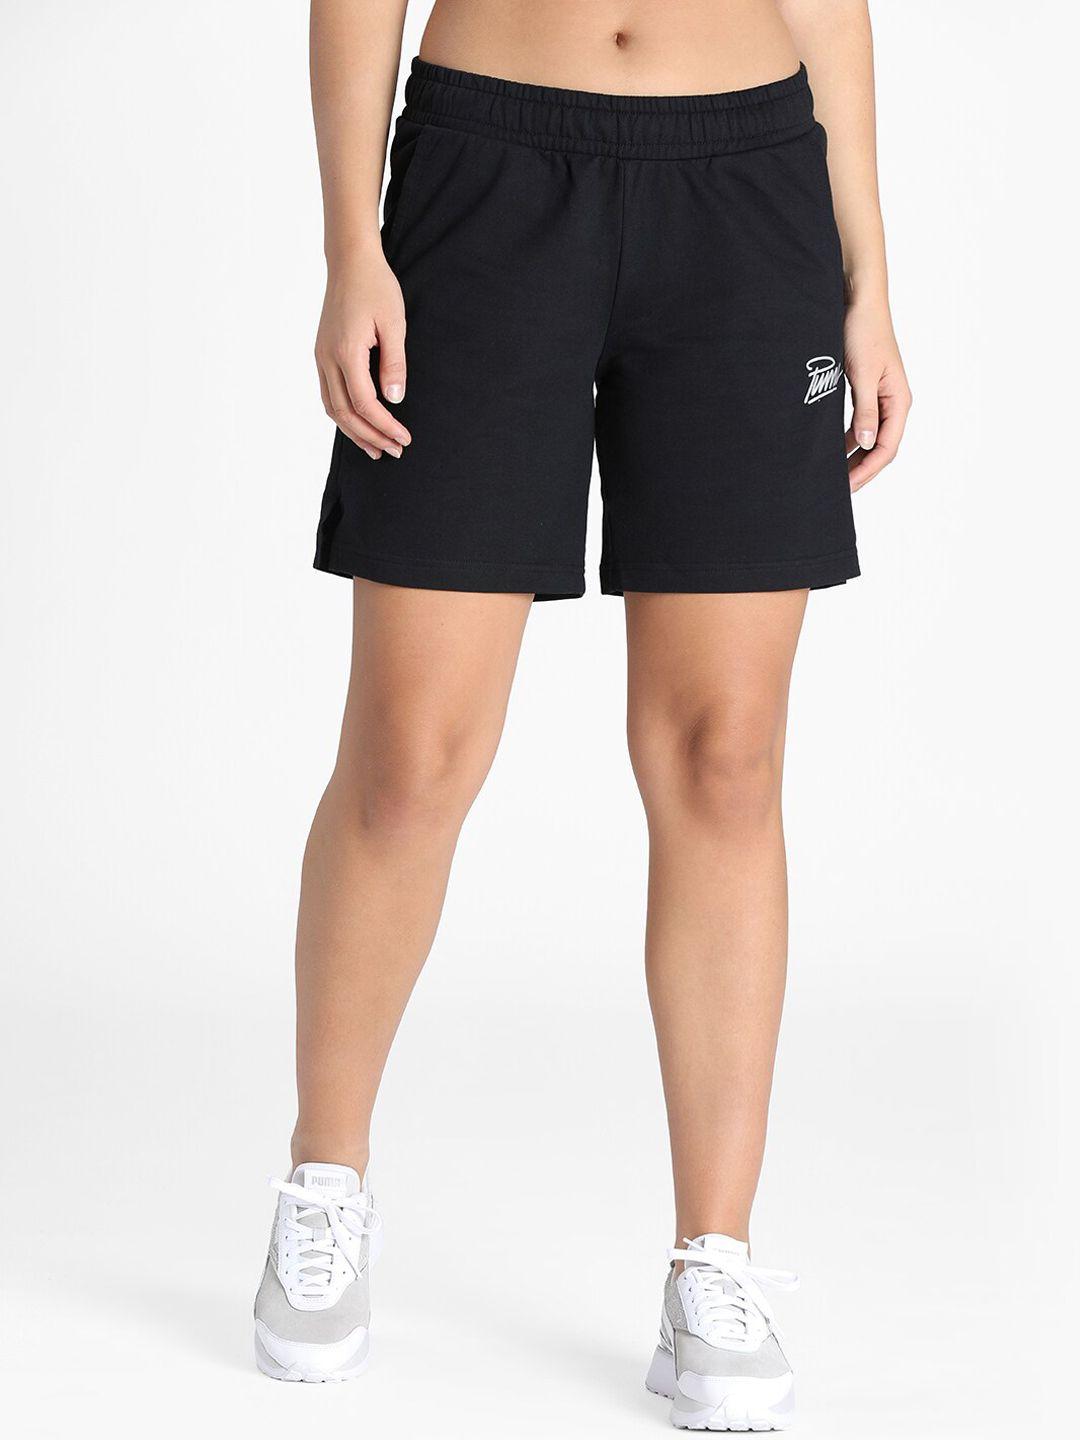 puma-women-black-solid-shorts